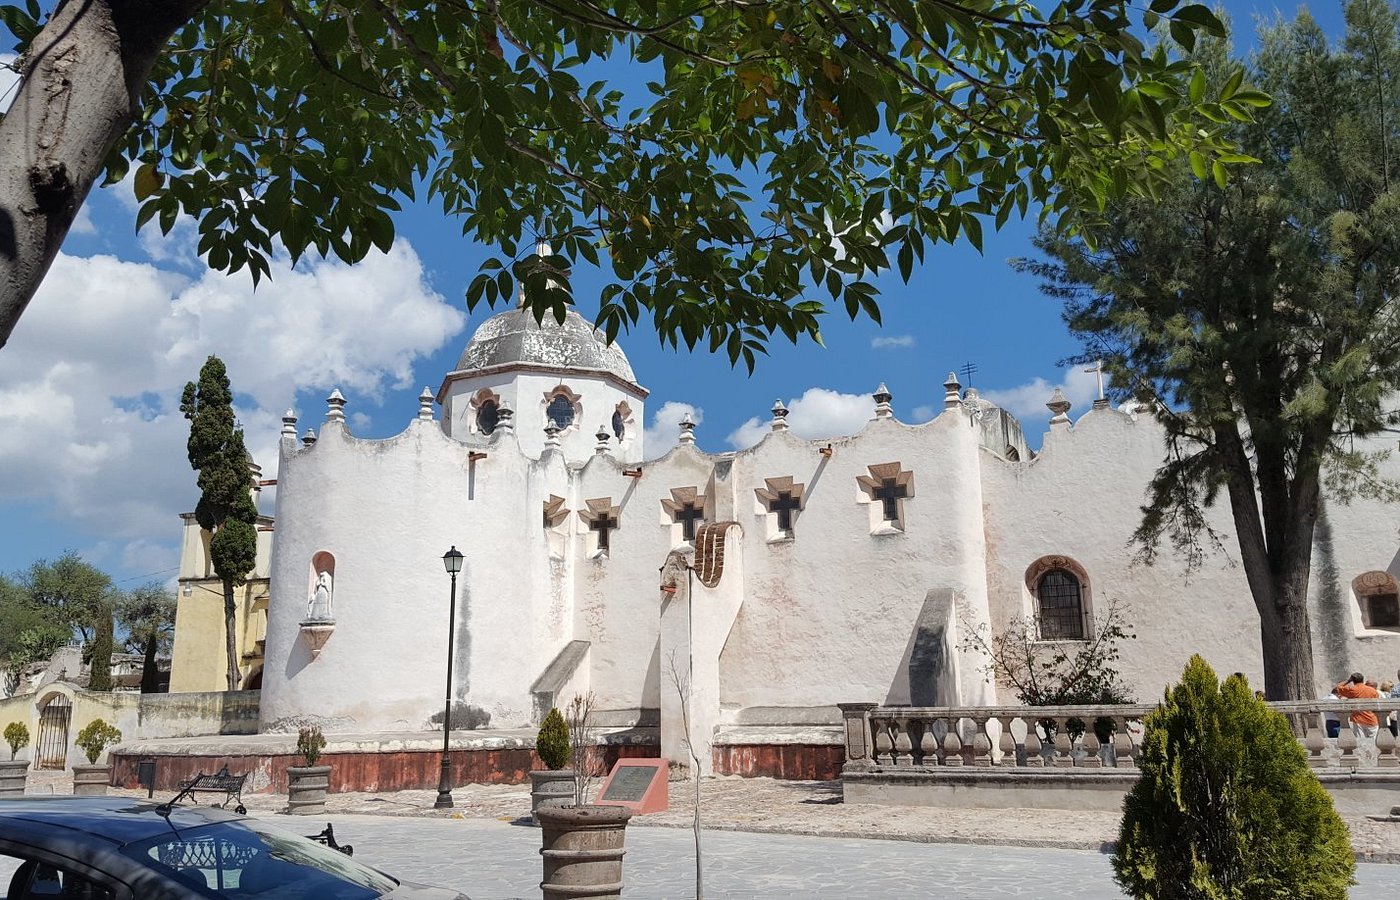 Atotonilco, Mexico 2023: Best Places to Visit - Tripadvisor